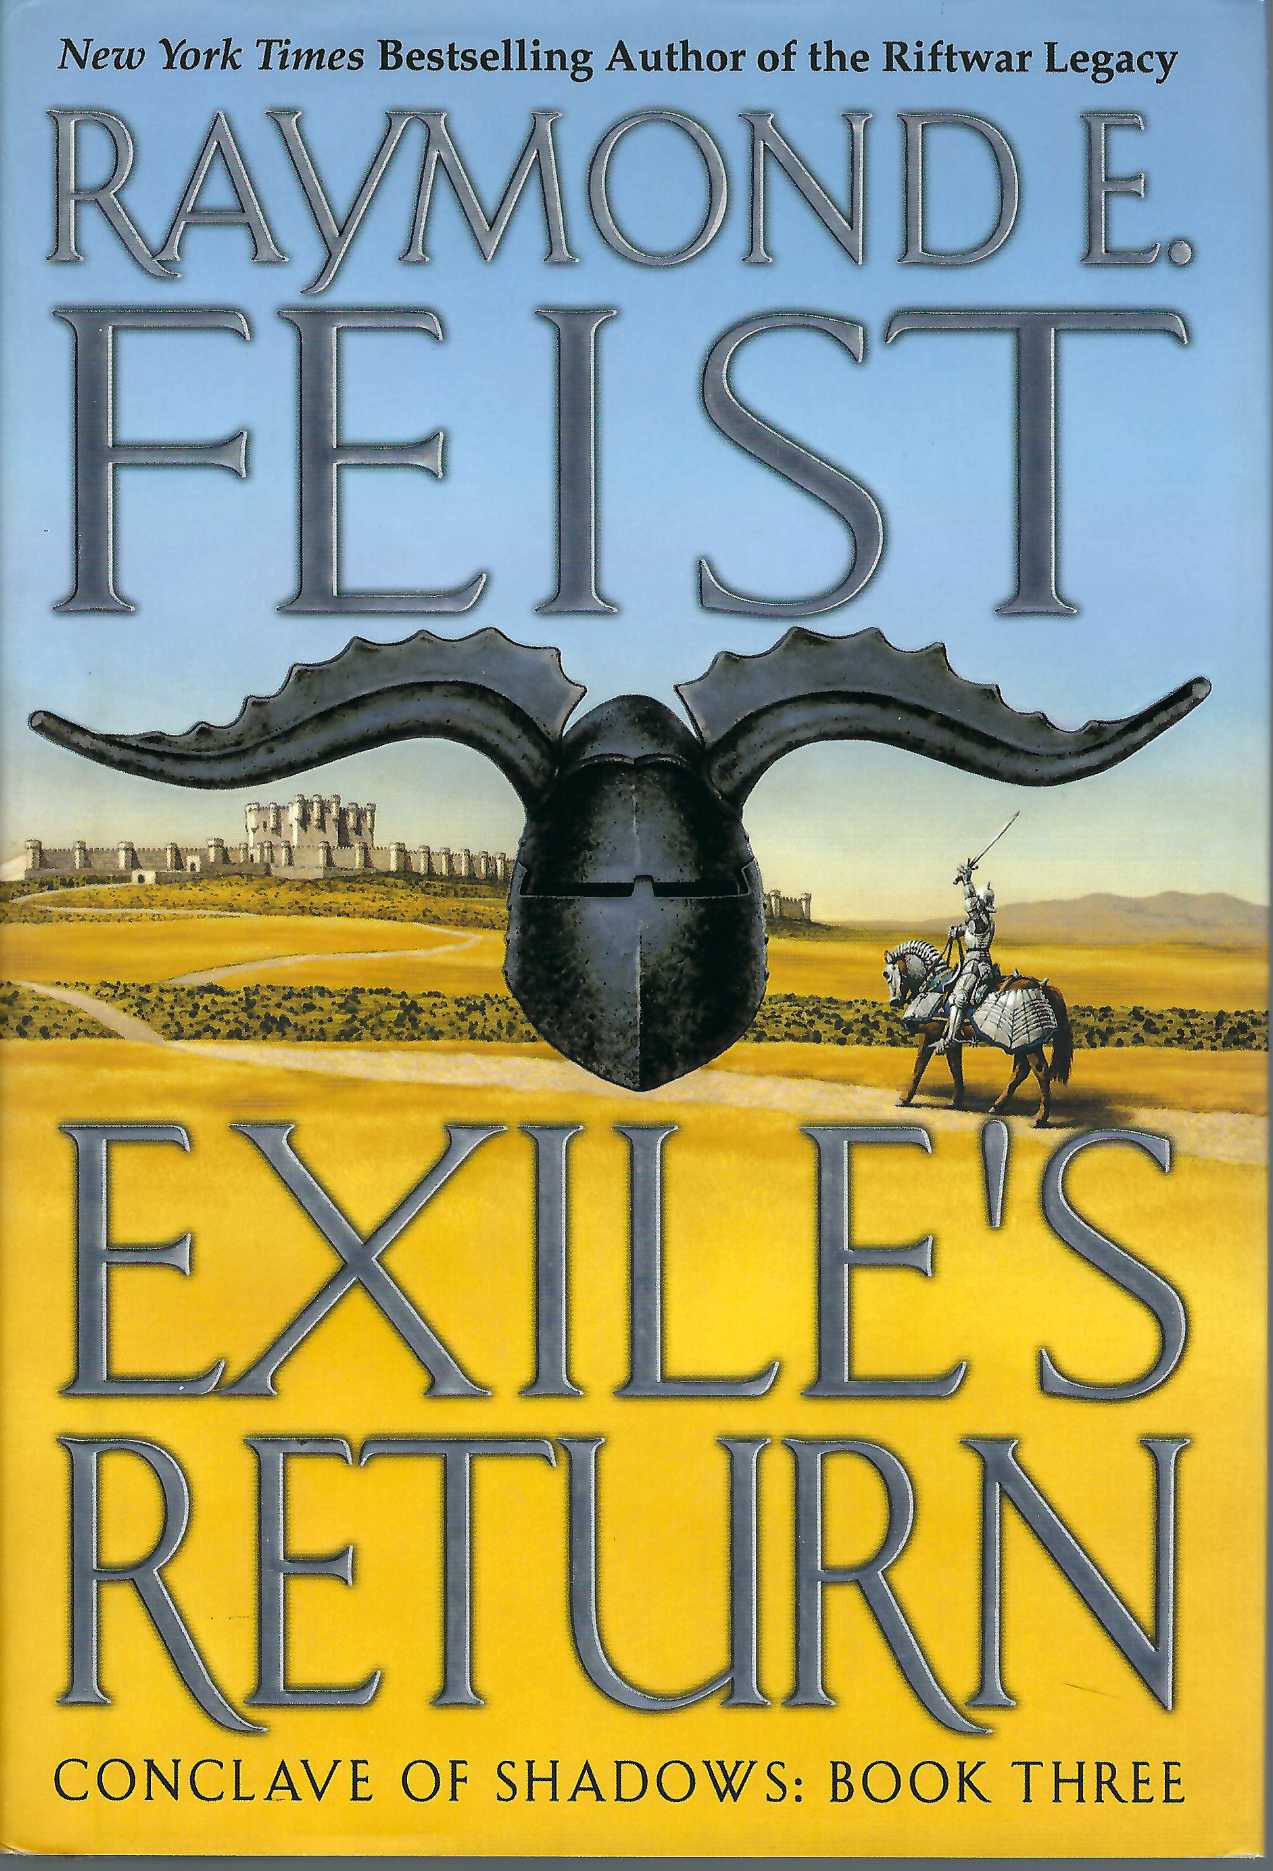 FEIST, RAYMOND E - Exile's Return: Conclave of Shadows: Book Three